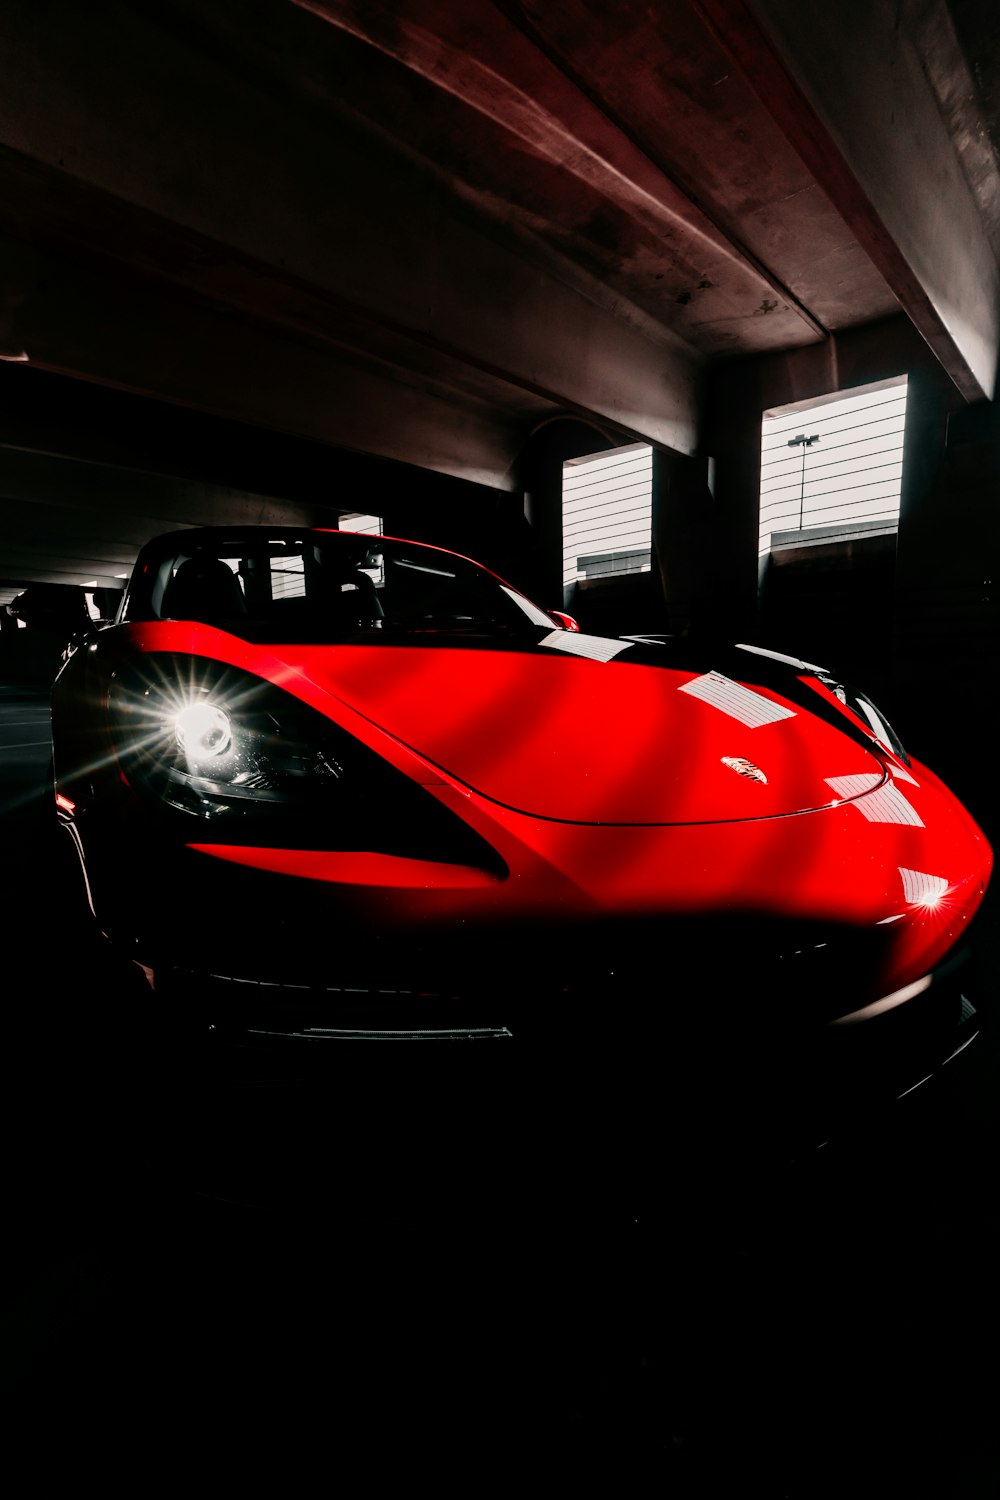 red ferrari 458 italia parked in garage